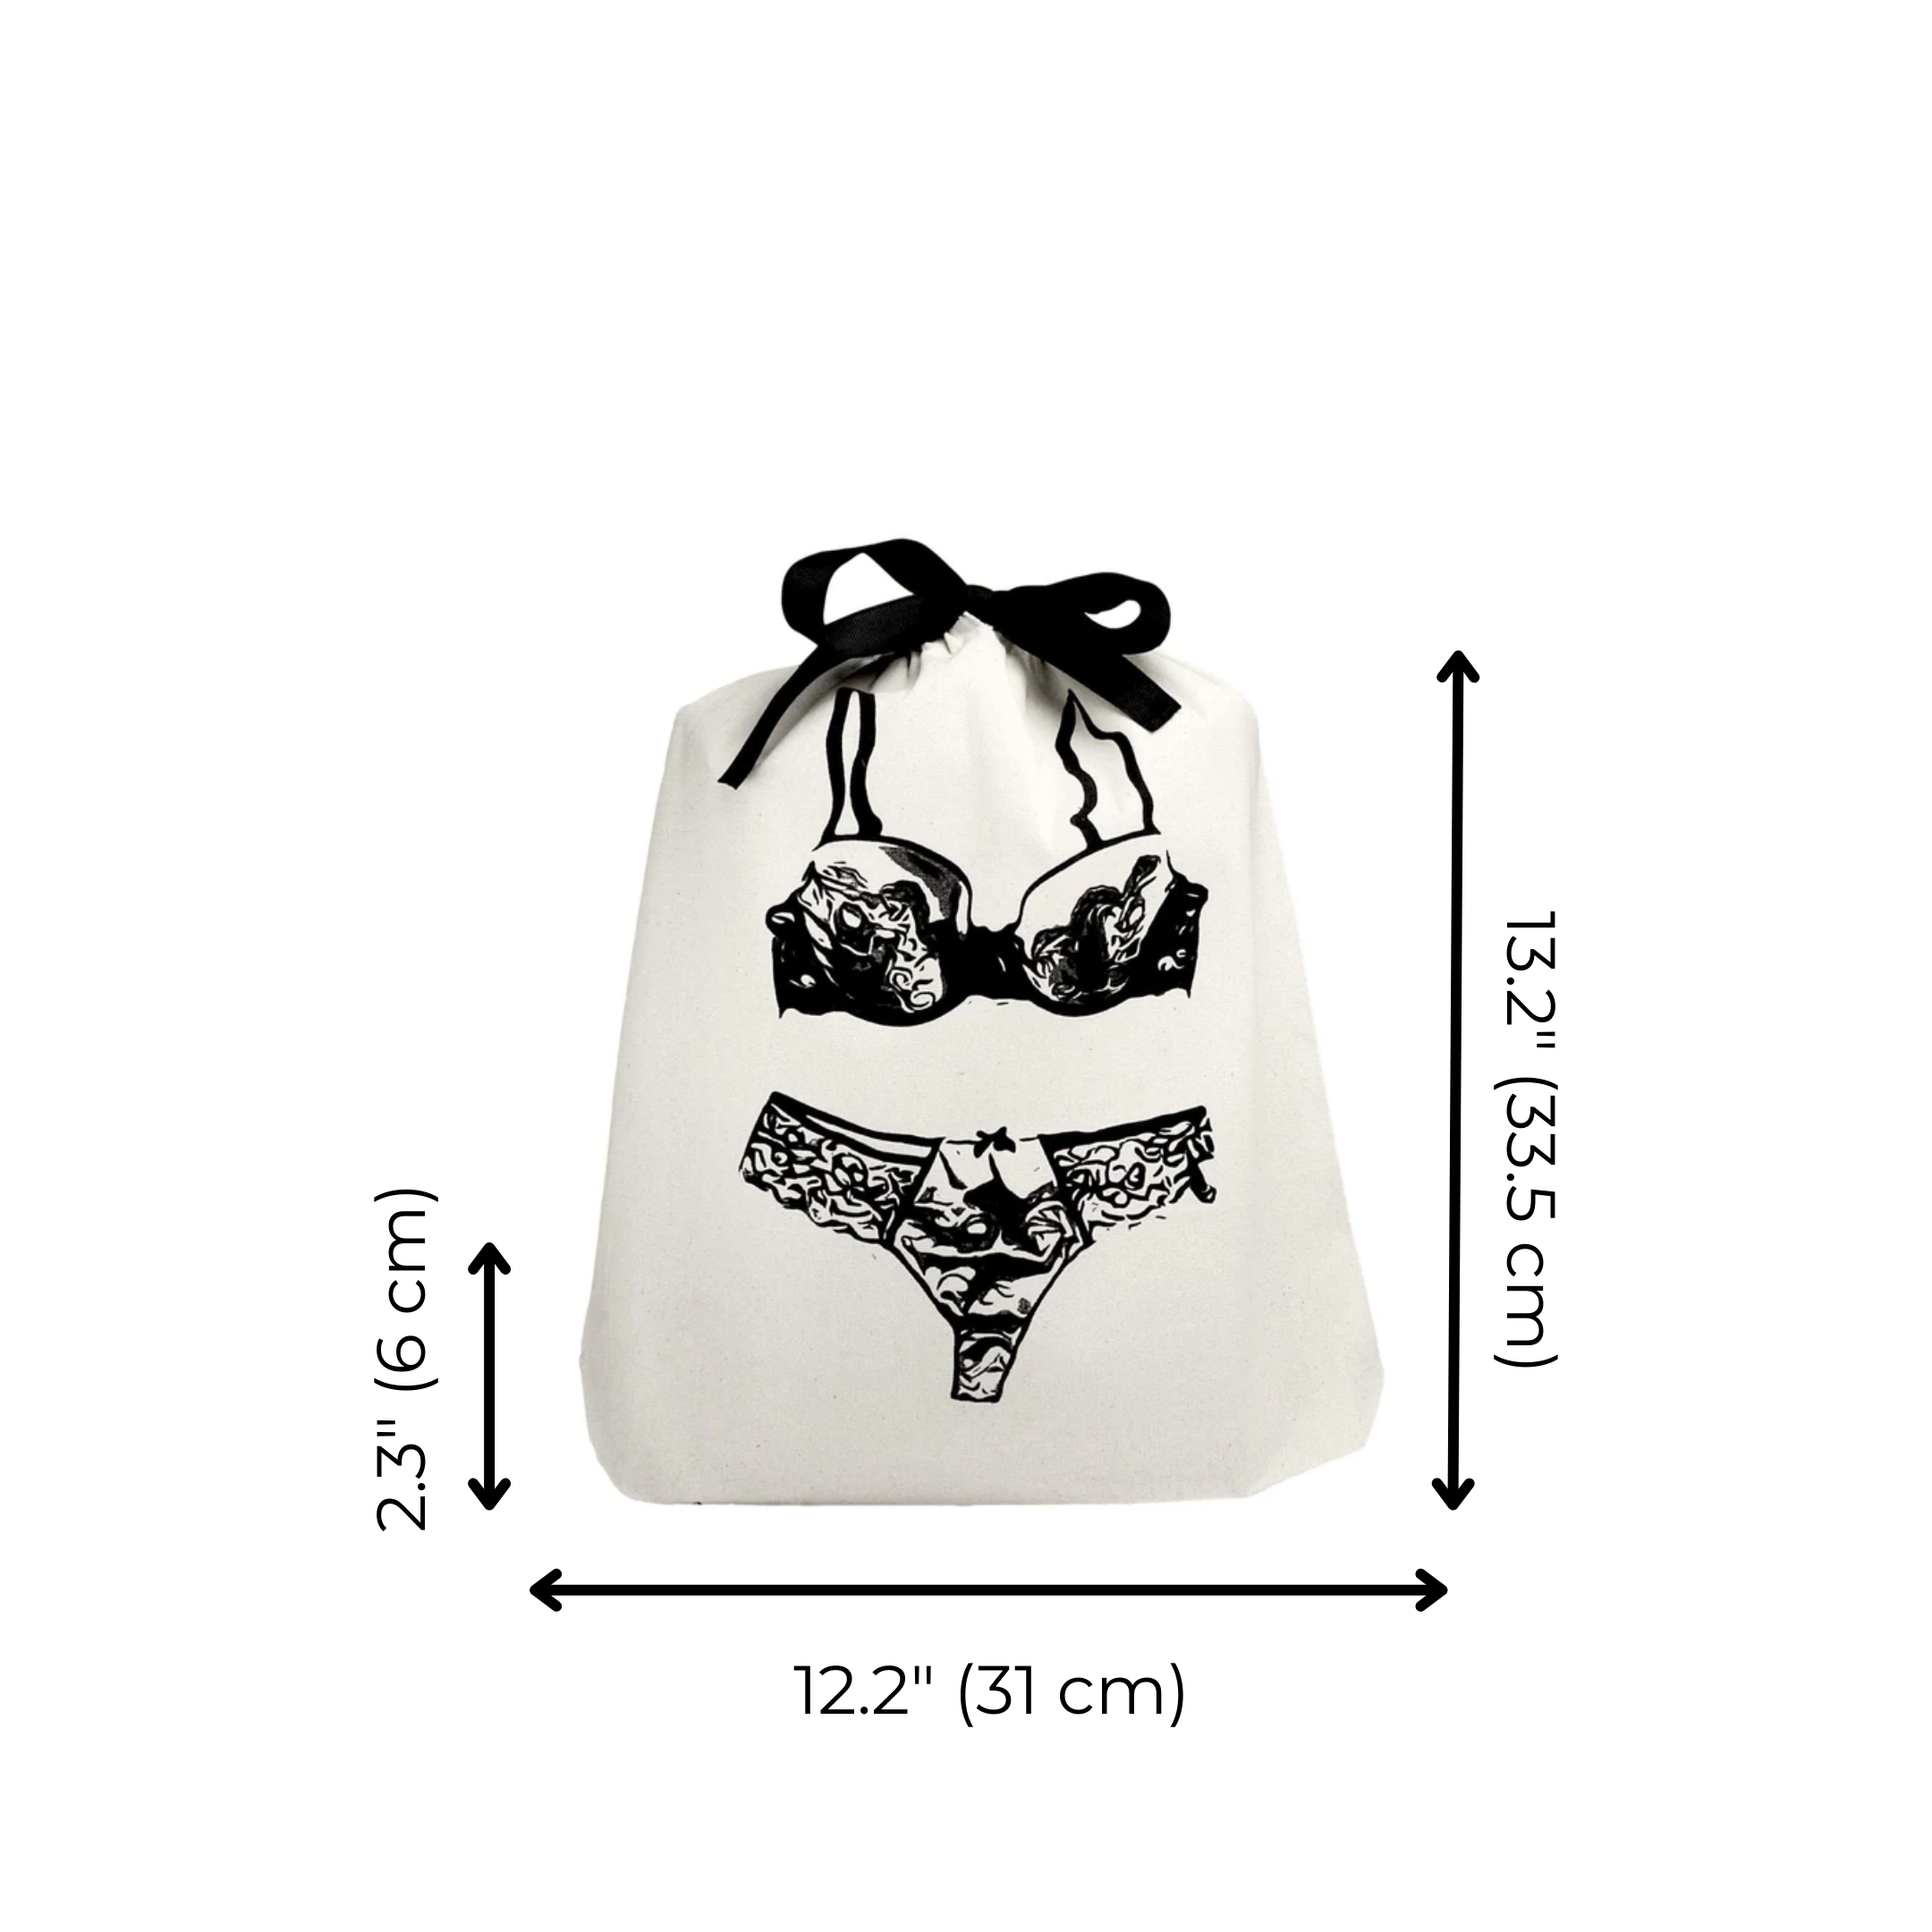 Lace Lingerie Travel Bag, Cream | Bag-all